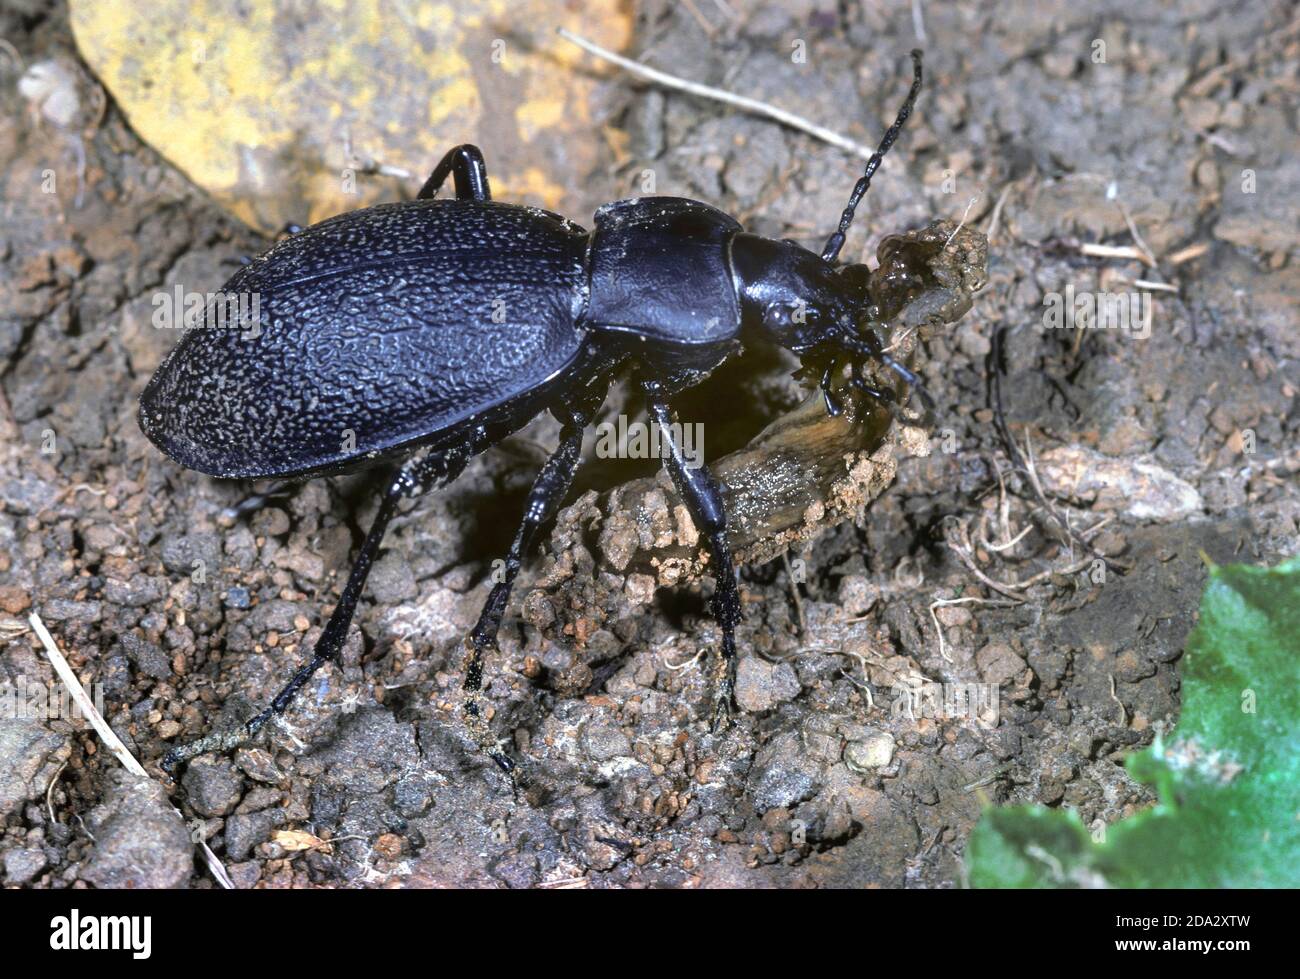 leatherback ground beetle (Carabus coriaceus), with caught slug, Germany Stock Photo